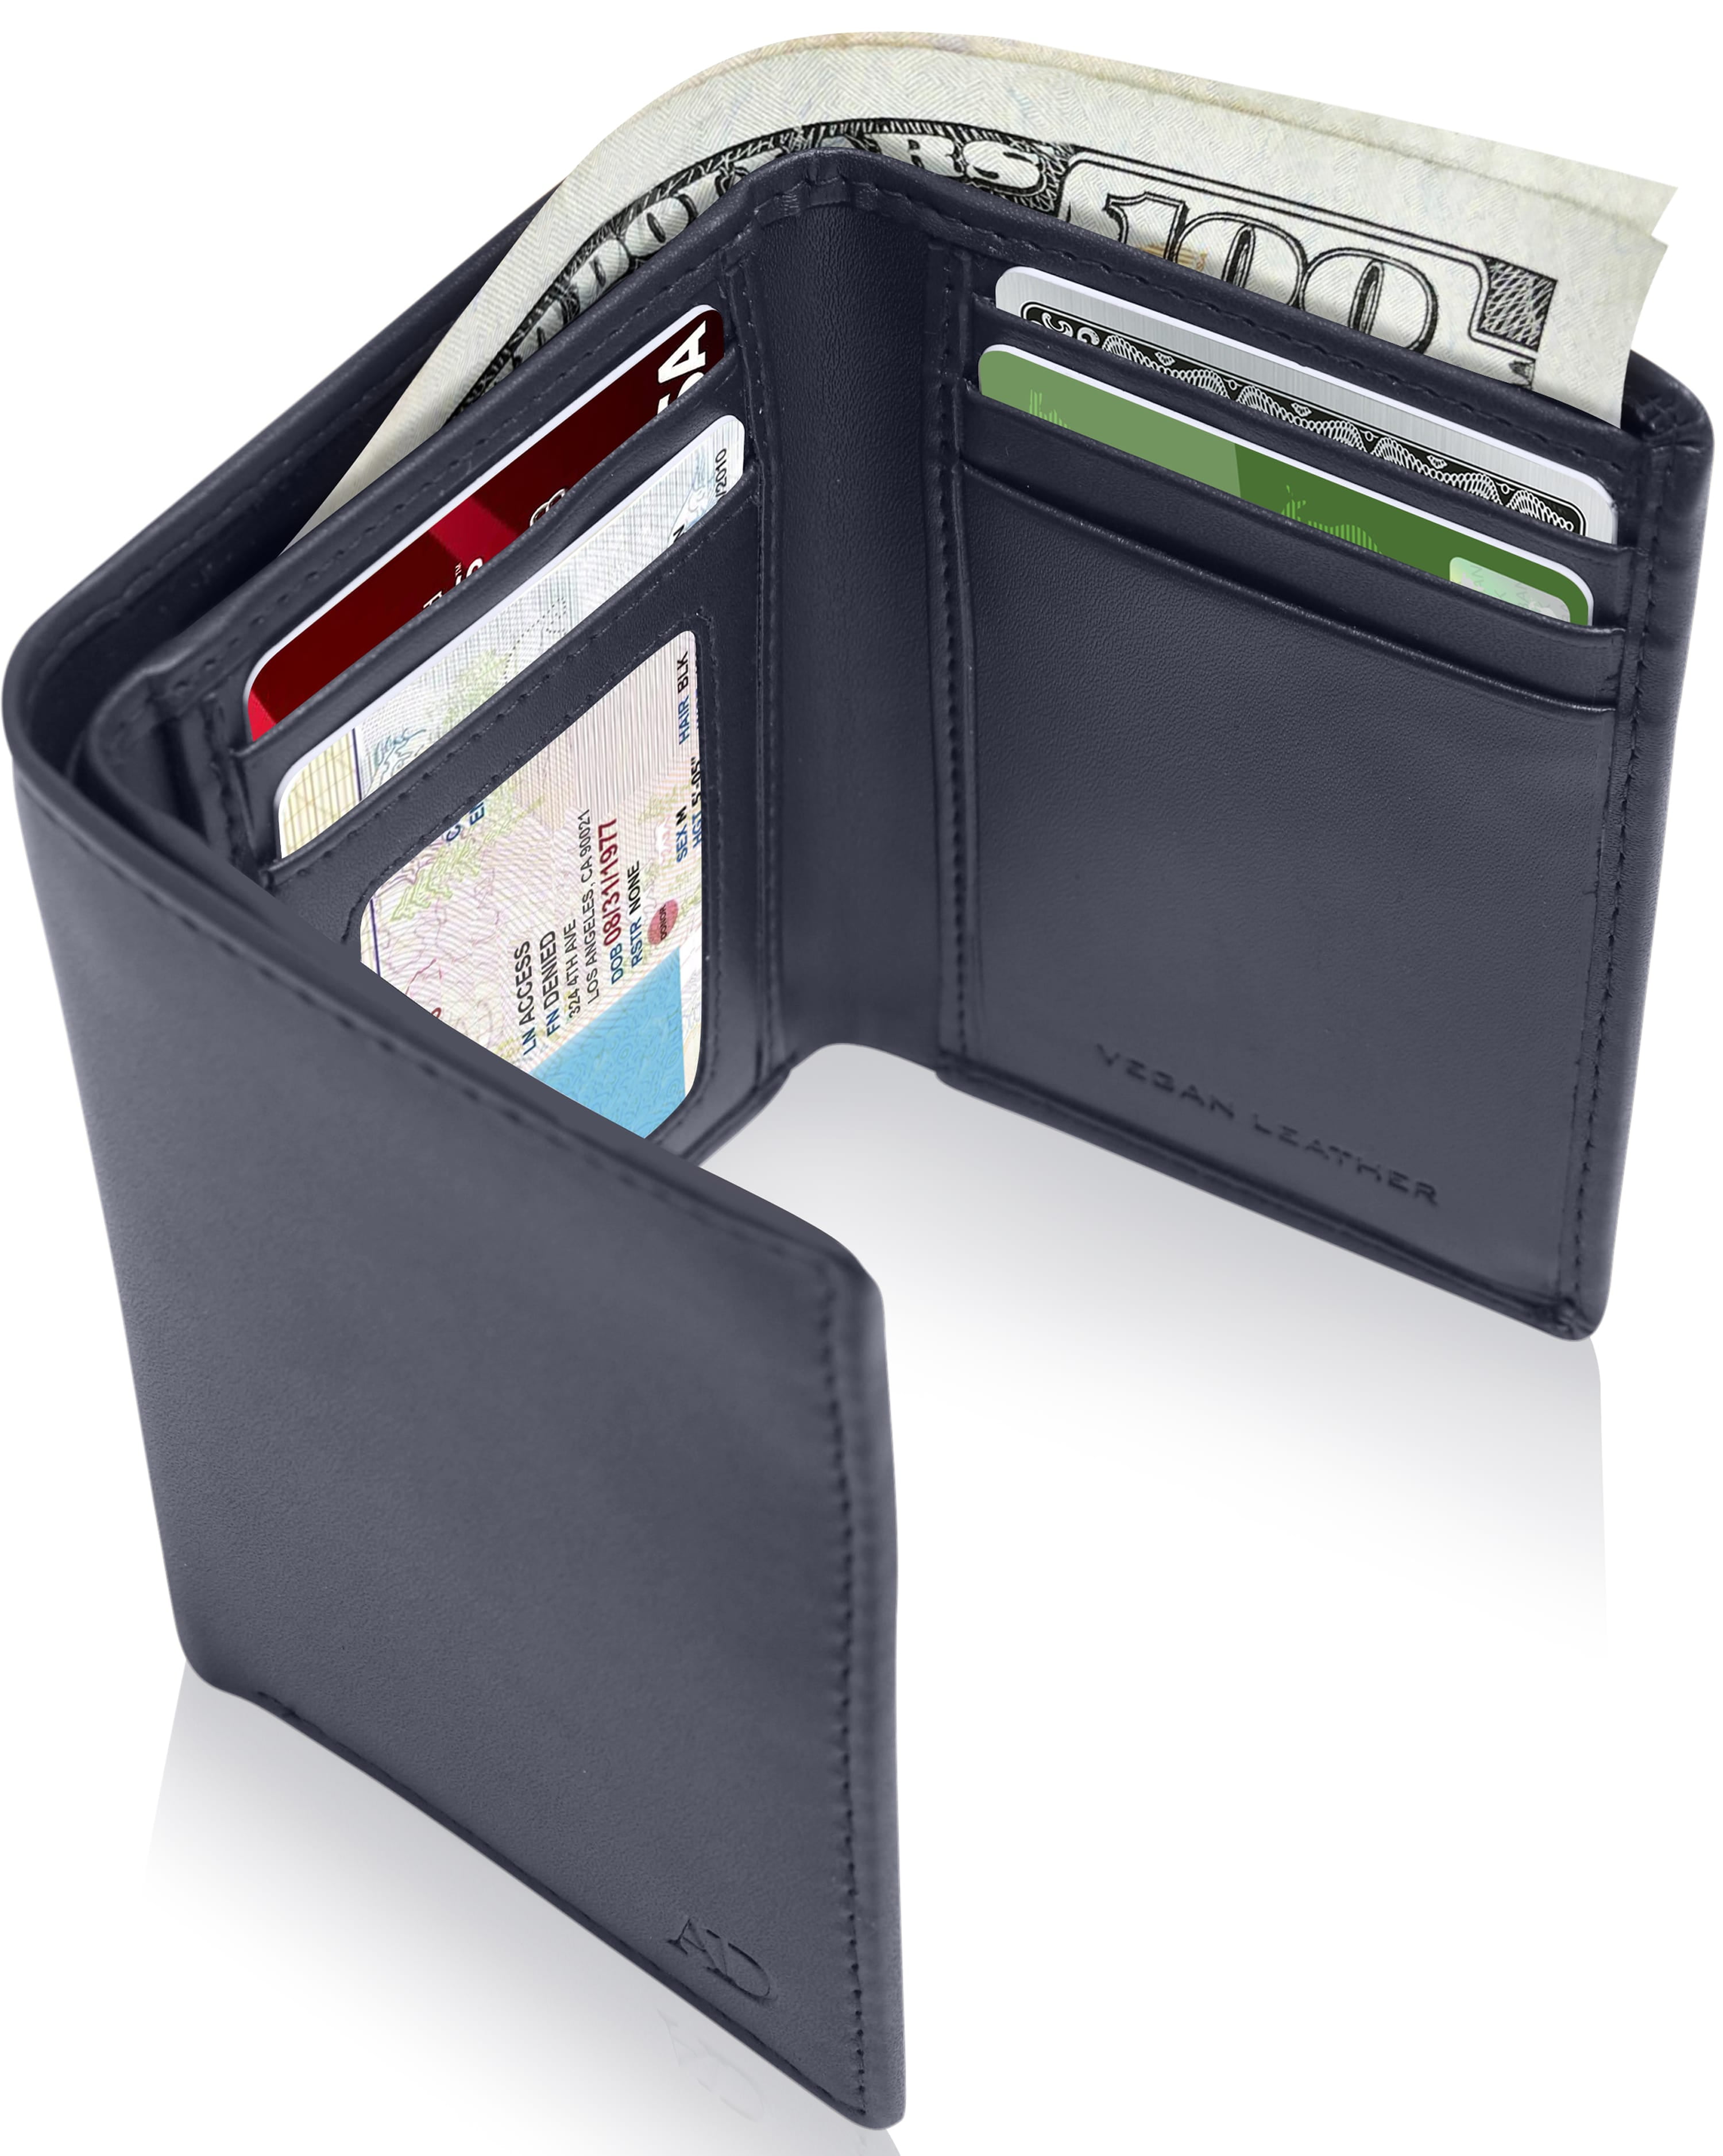 Three fold wallet